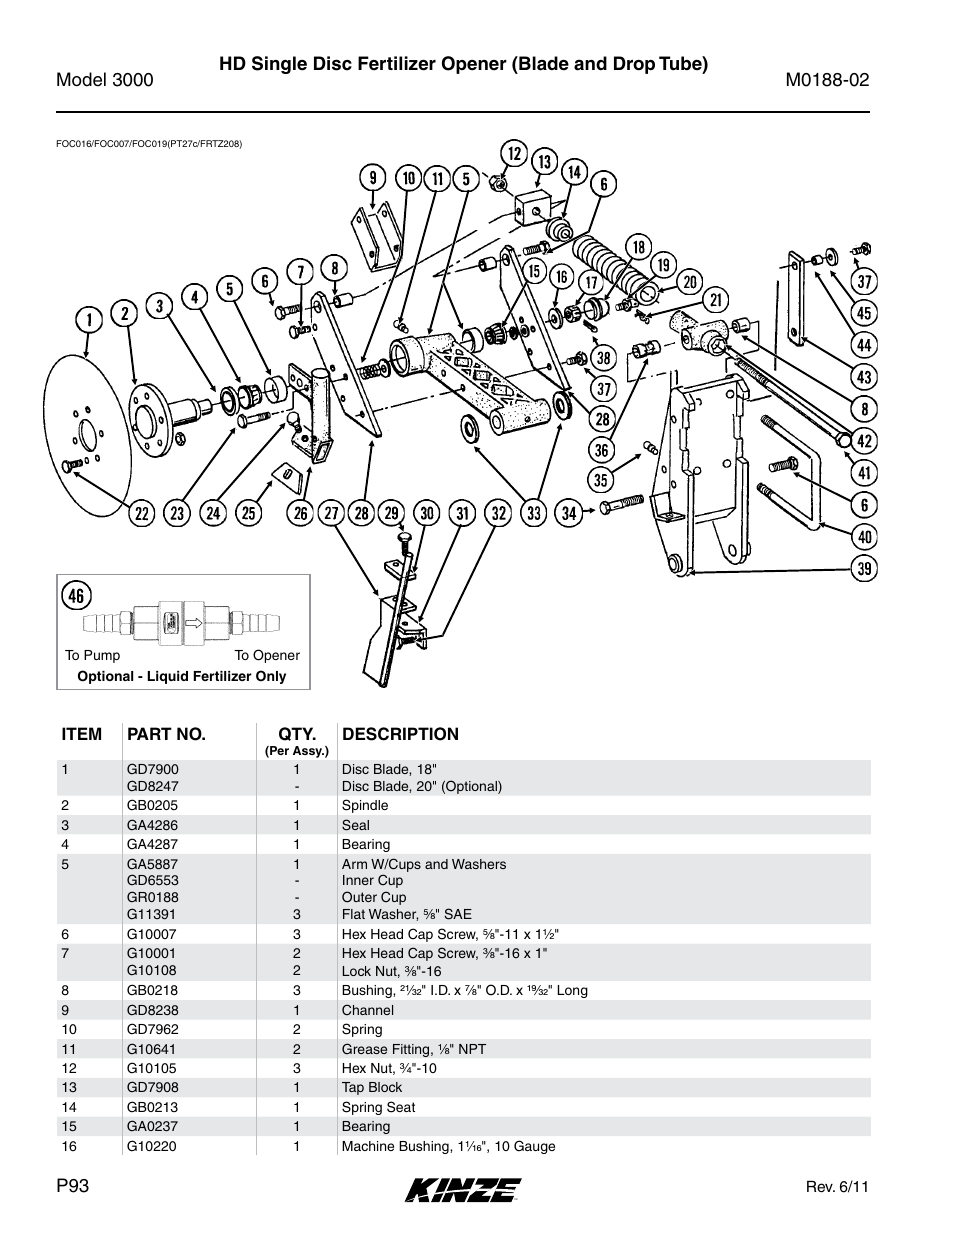 Kinze 3000 Rigid Frame Planter Rev. 5/14 User Manual | Page 96 / 154